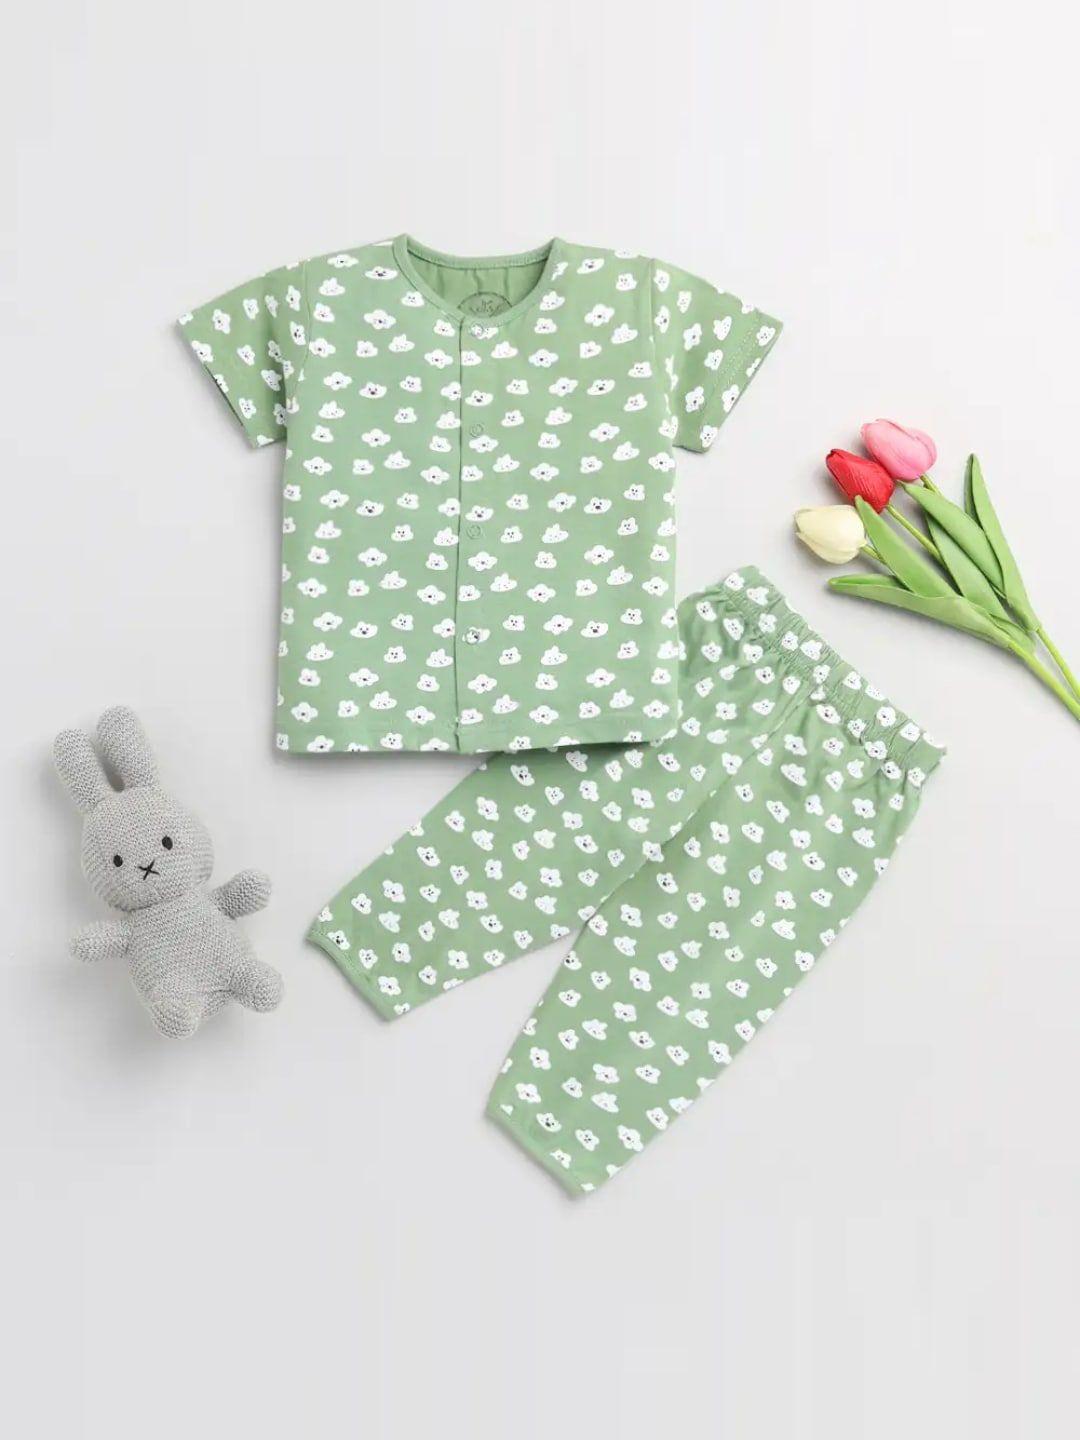 clt s unisex kids green printed night suit 100% cotton